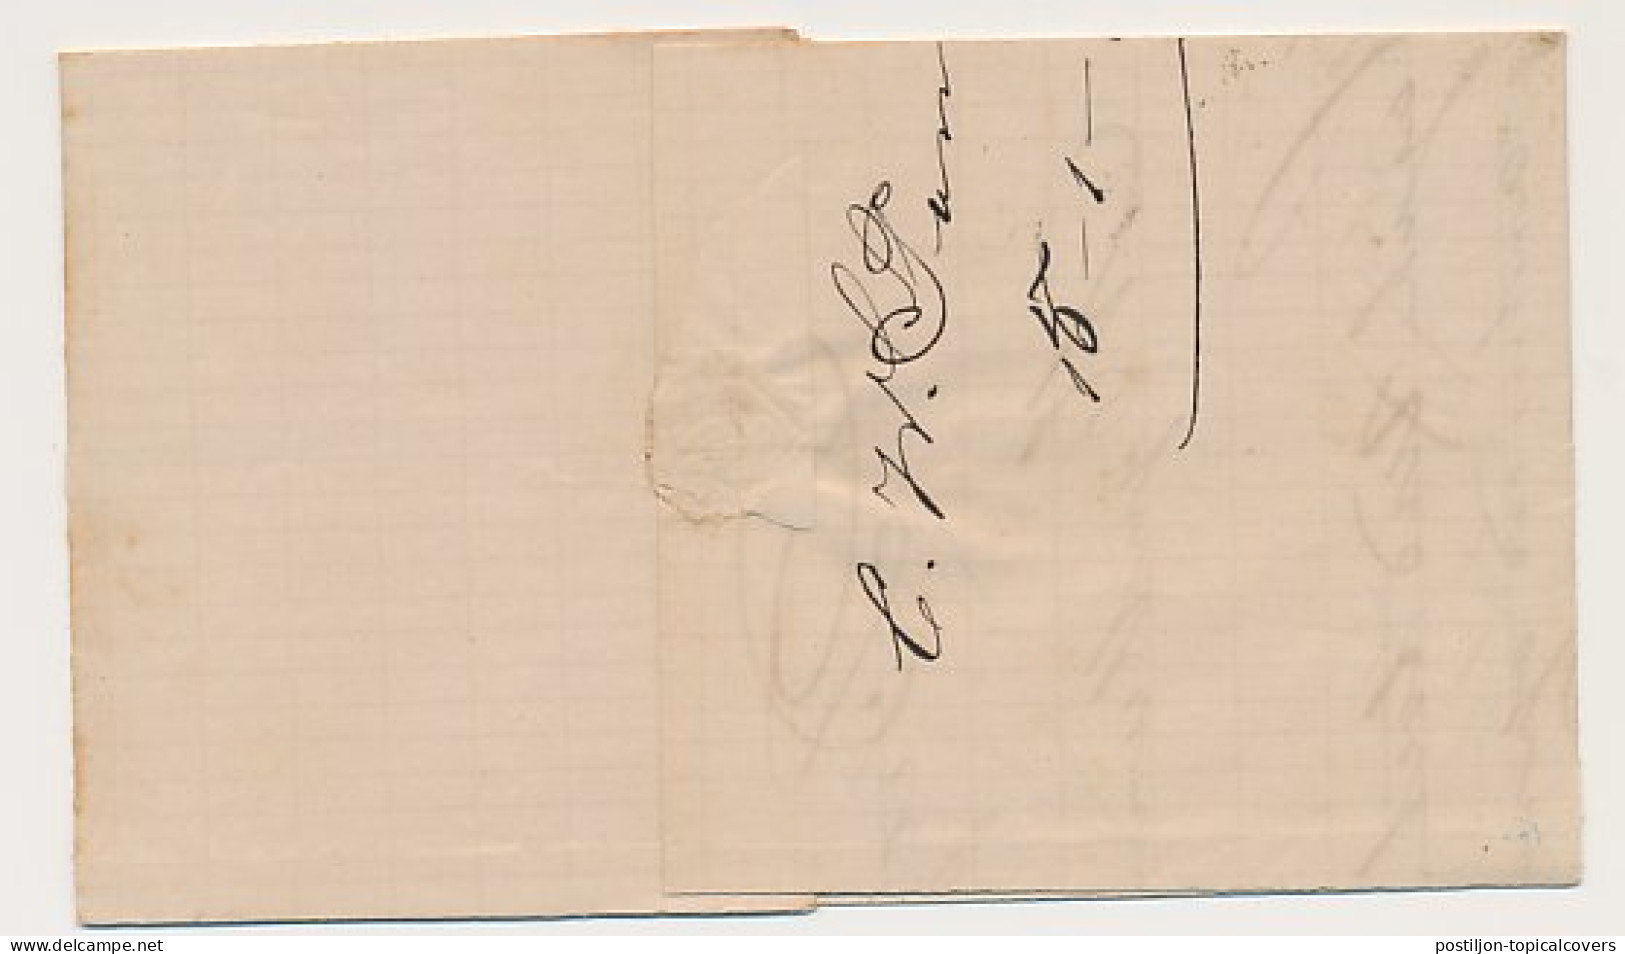 Trein Haltestempel Delft 1871 - Lettres & Documents